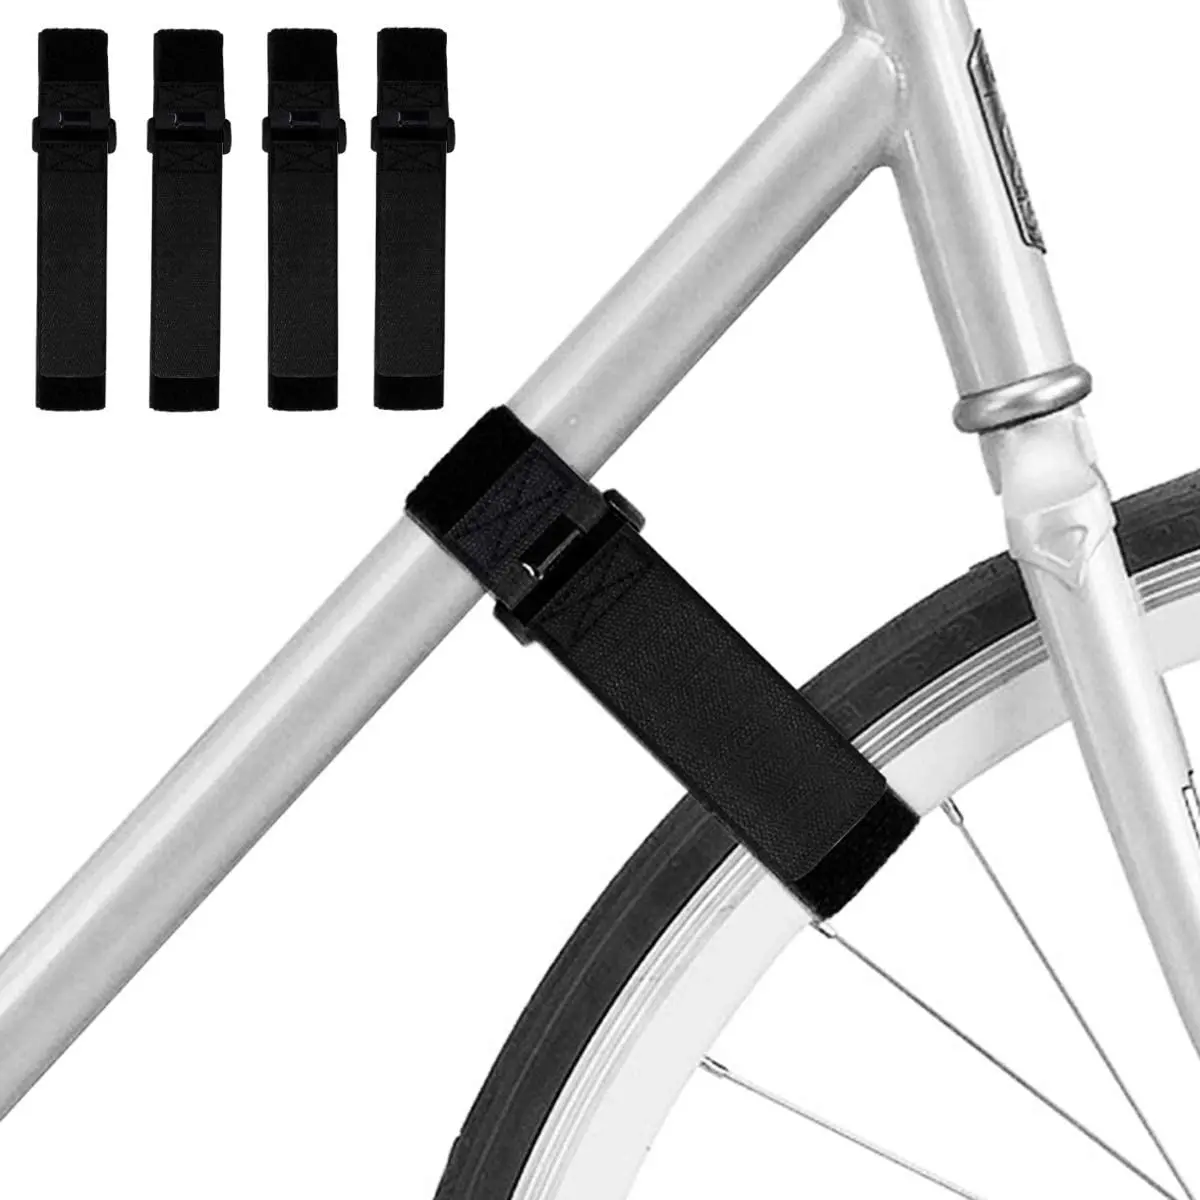 

High Quality nylon webbing Bike Wheel Straps adjustable hook and loop strap mount bike holder, Black or customized